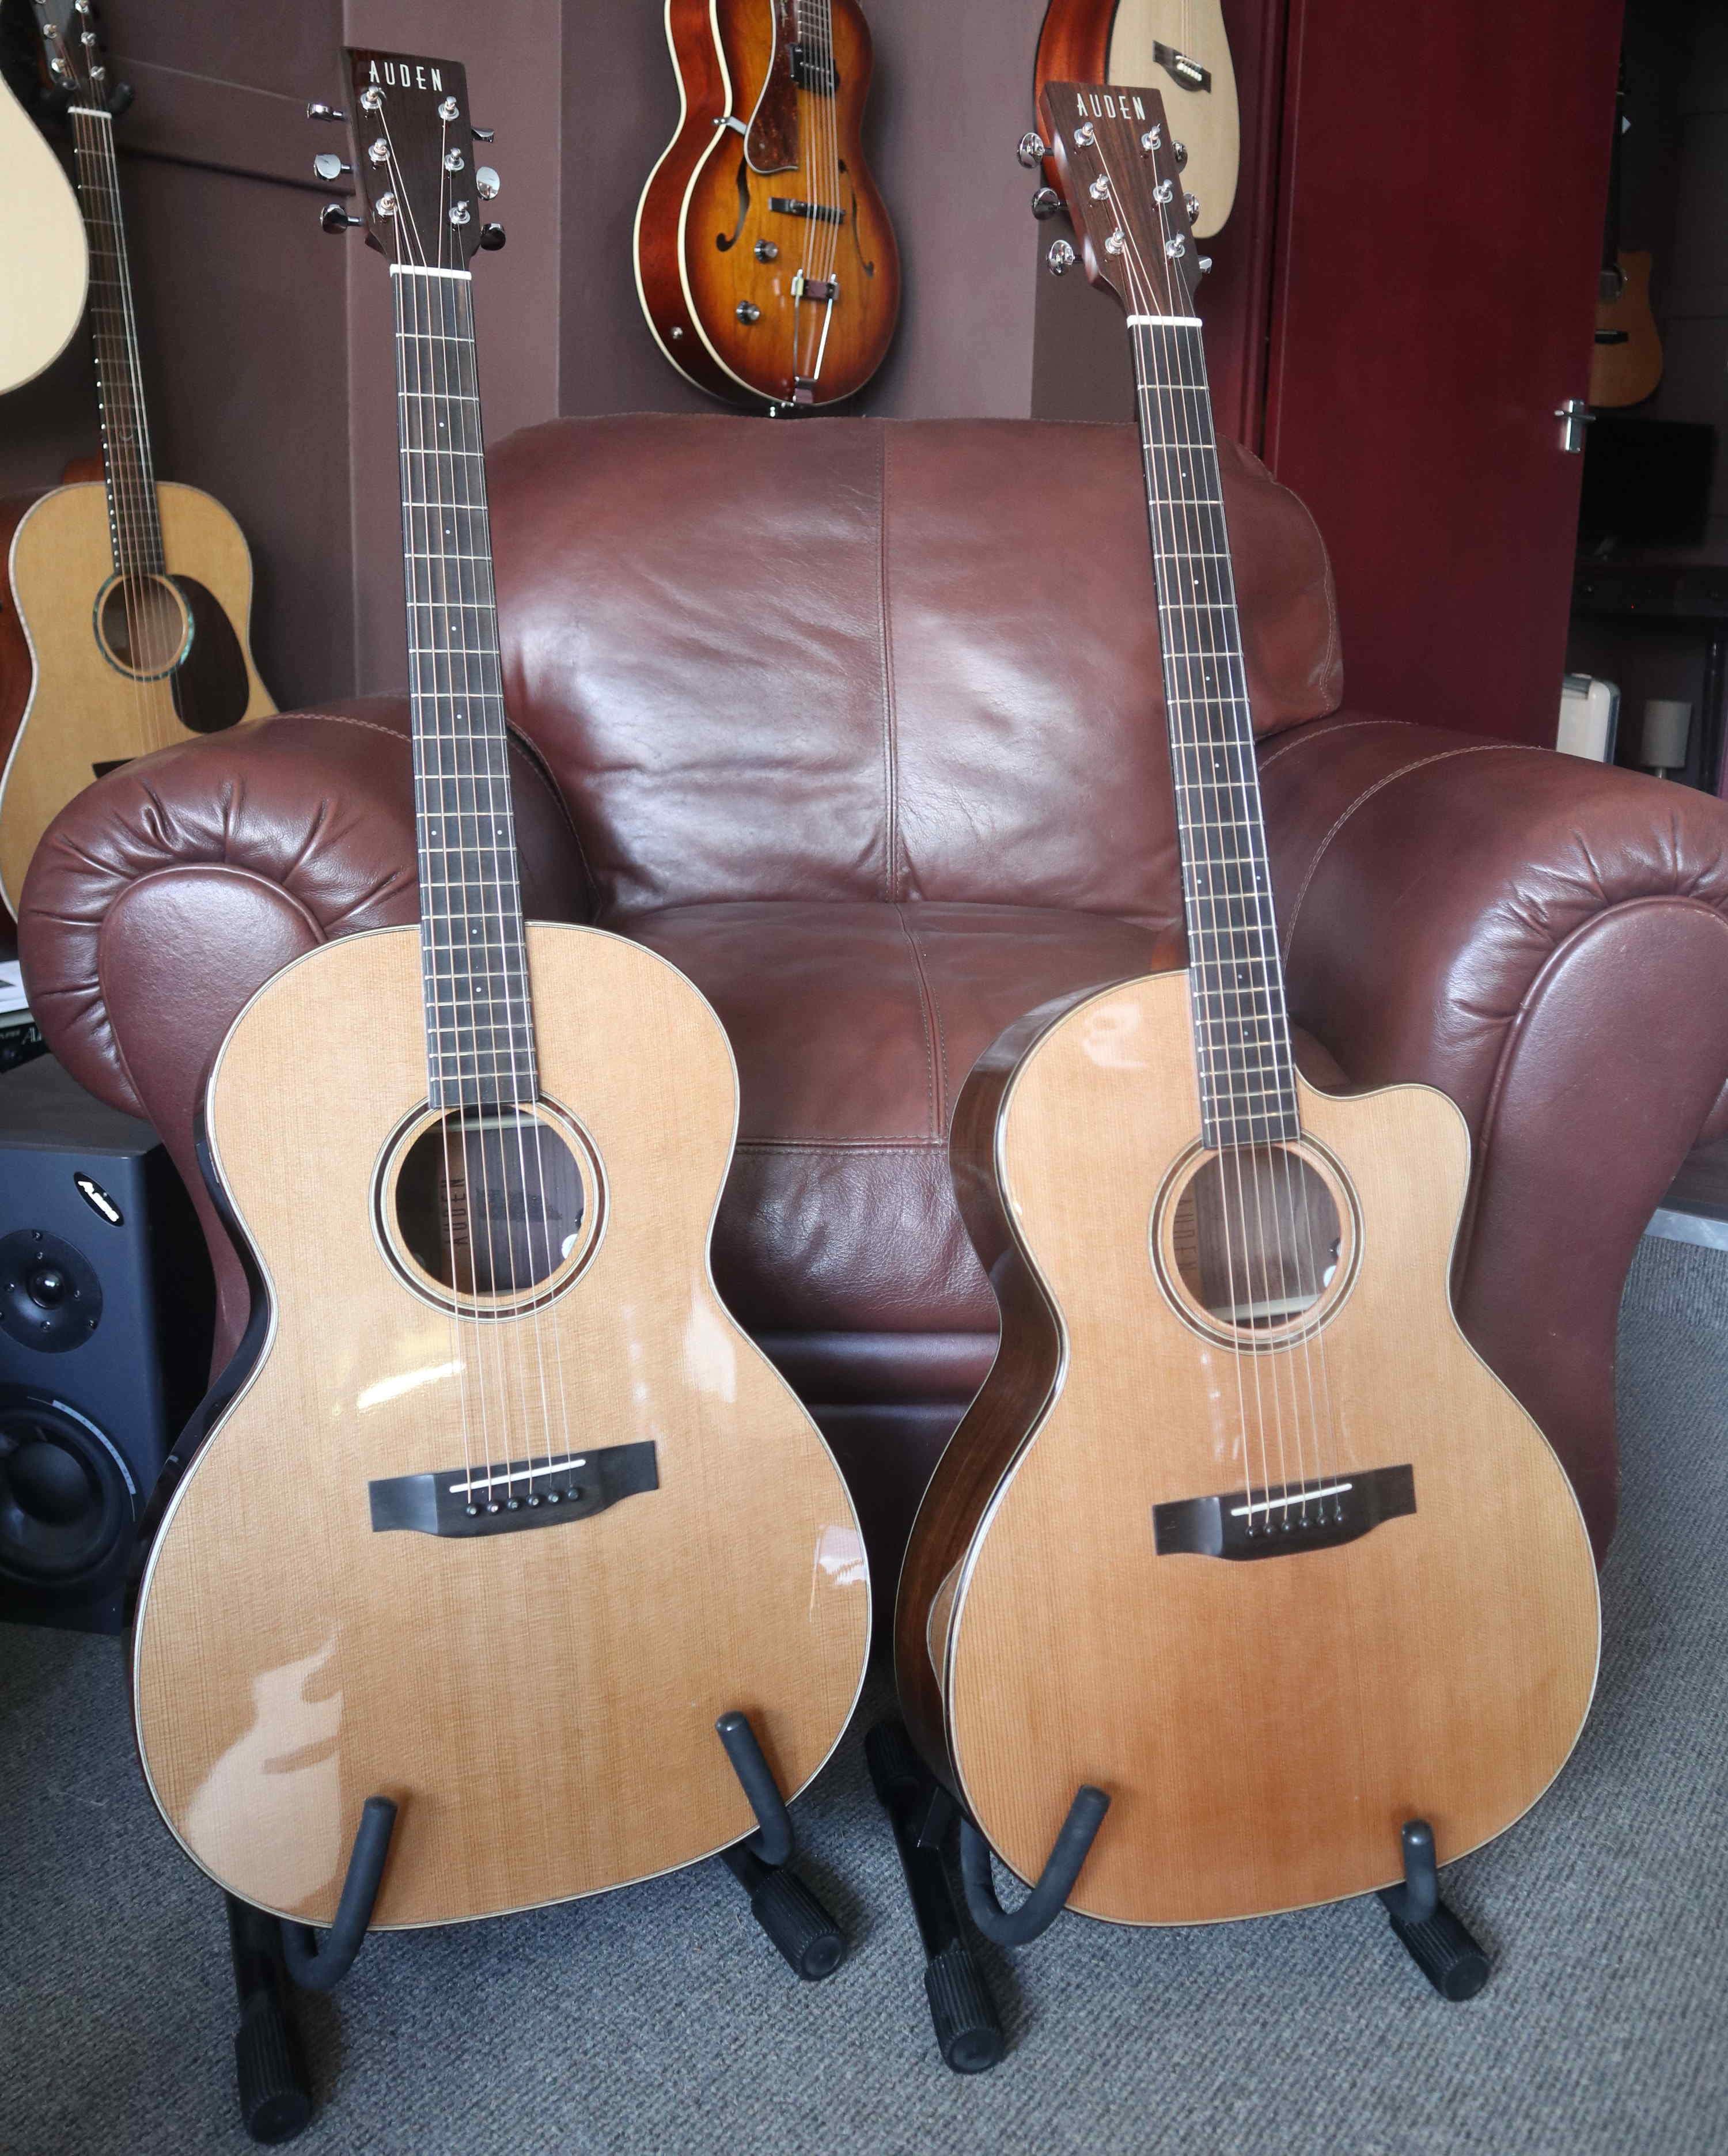 Auden Artist Chester Full Body Cedar/Rosewood Full Body, Electro Acoustic Guitar for sale at Richards Guitars.